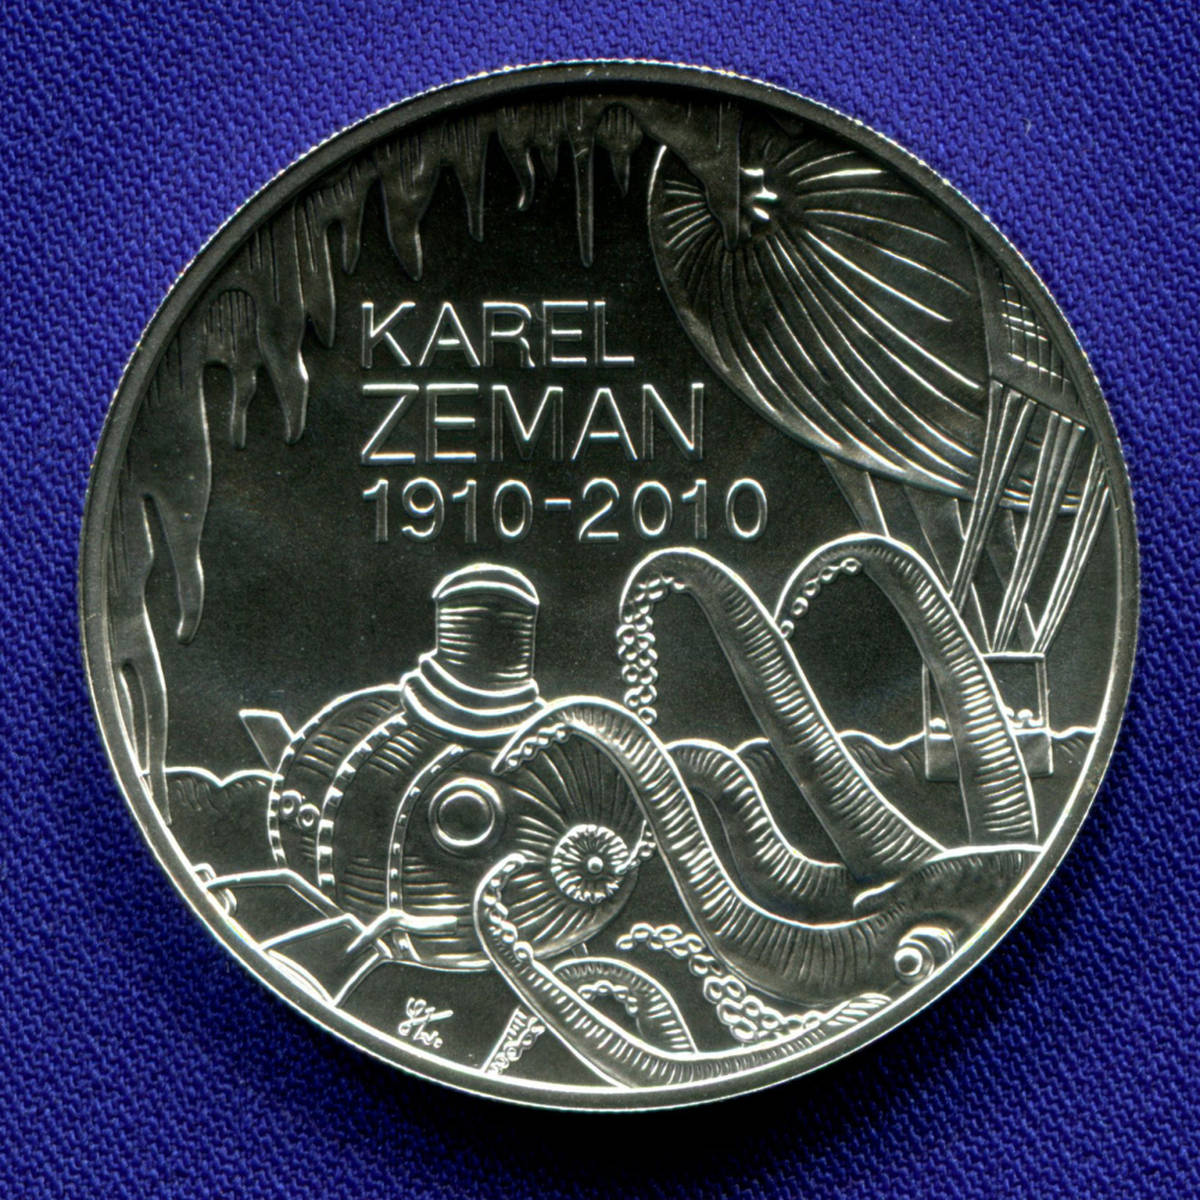 Чехия 200 крон 2010 UNC Карел Земан  - 19120